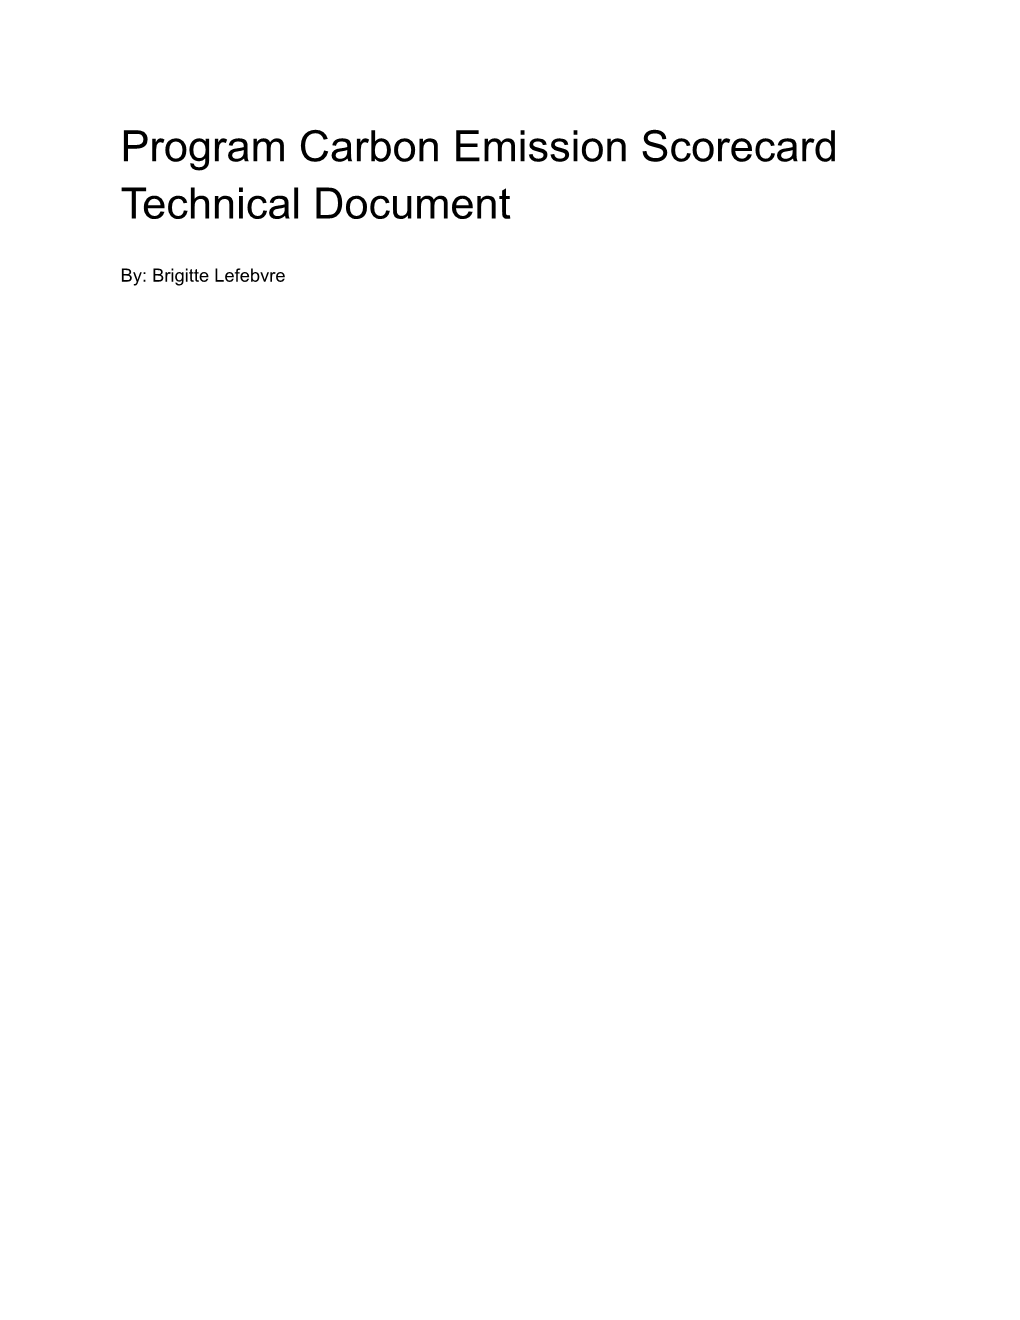 Copy of Scorecard Technical Document